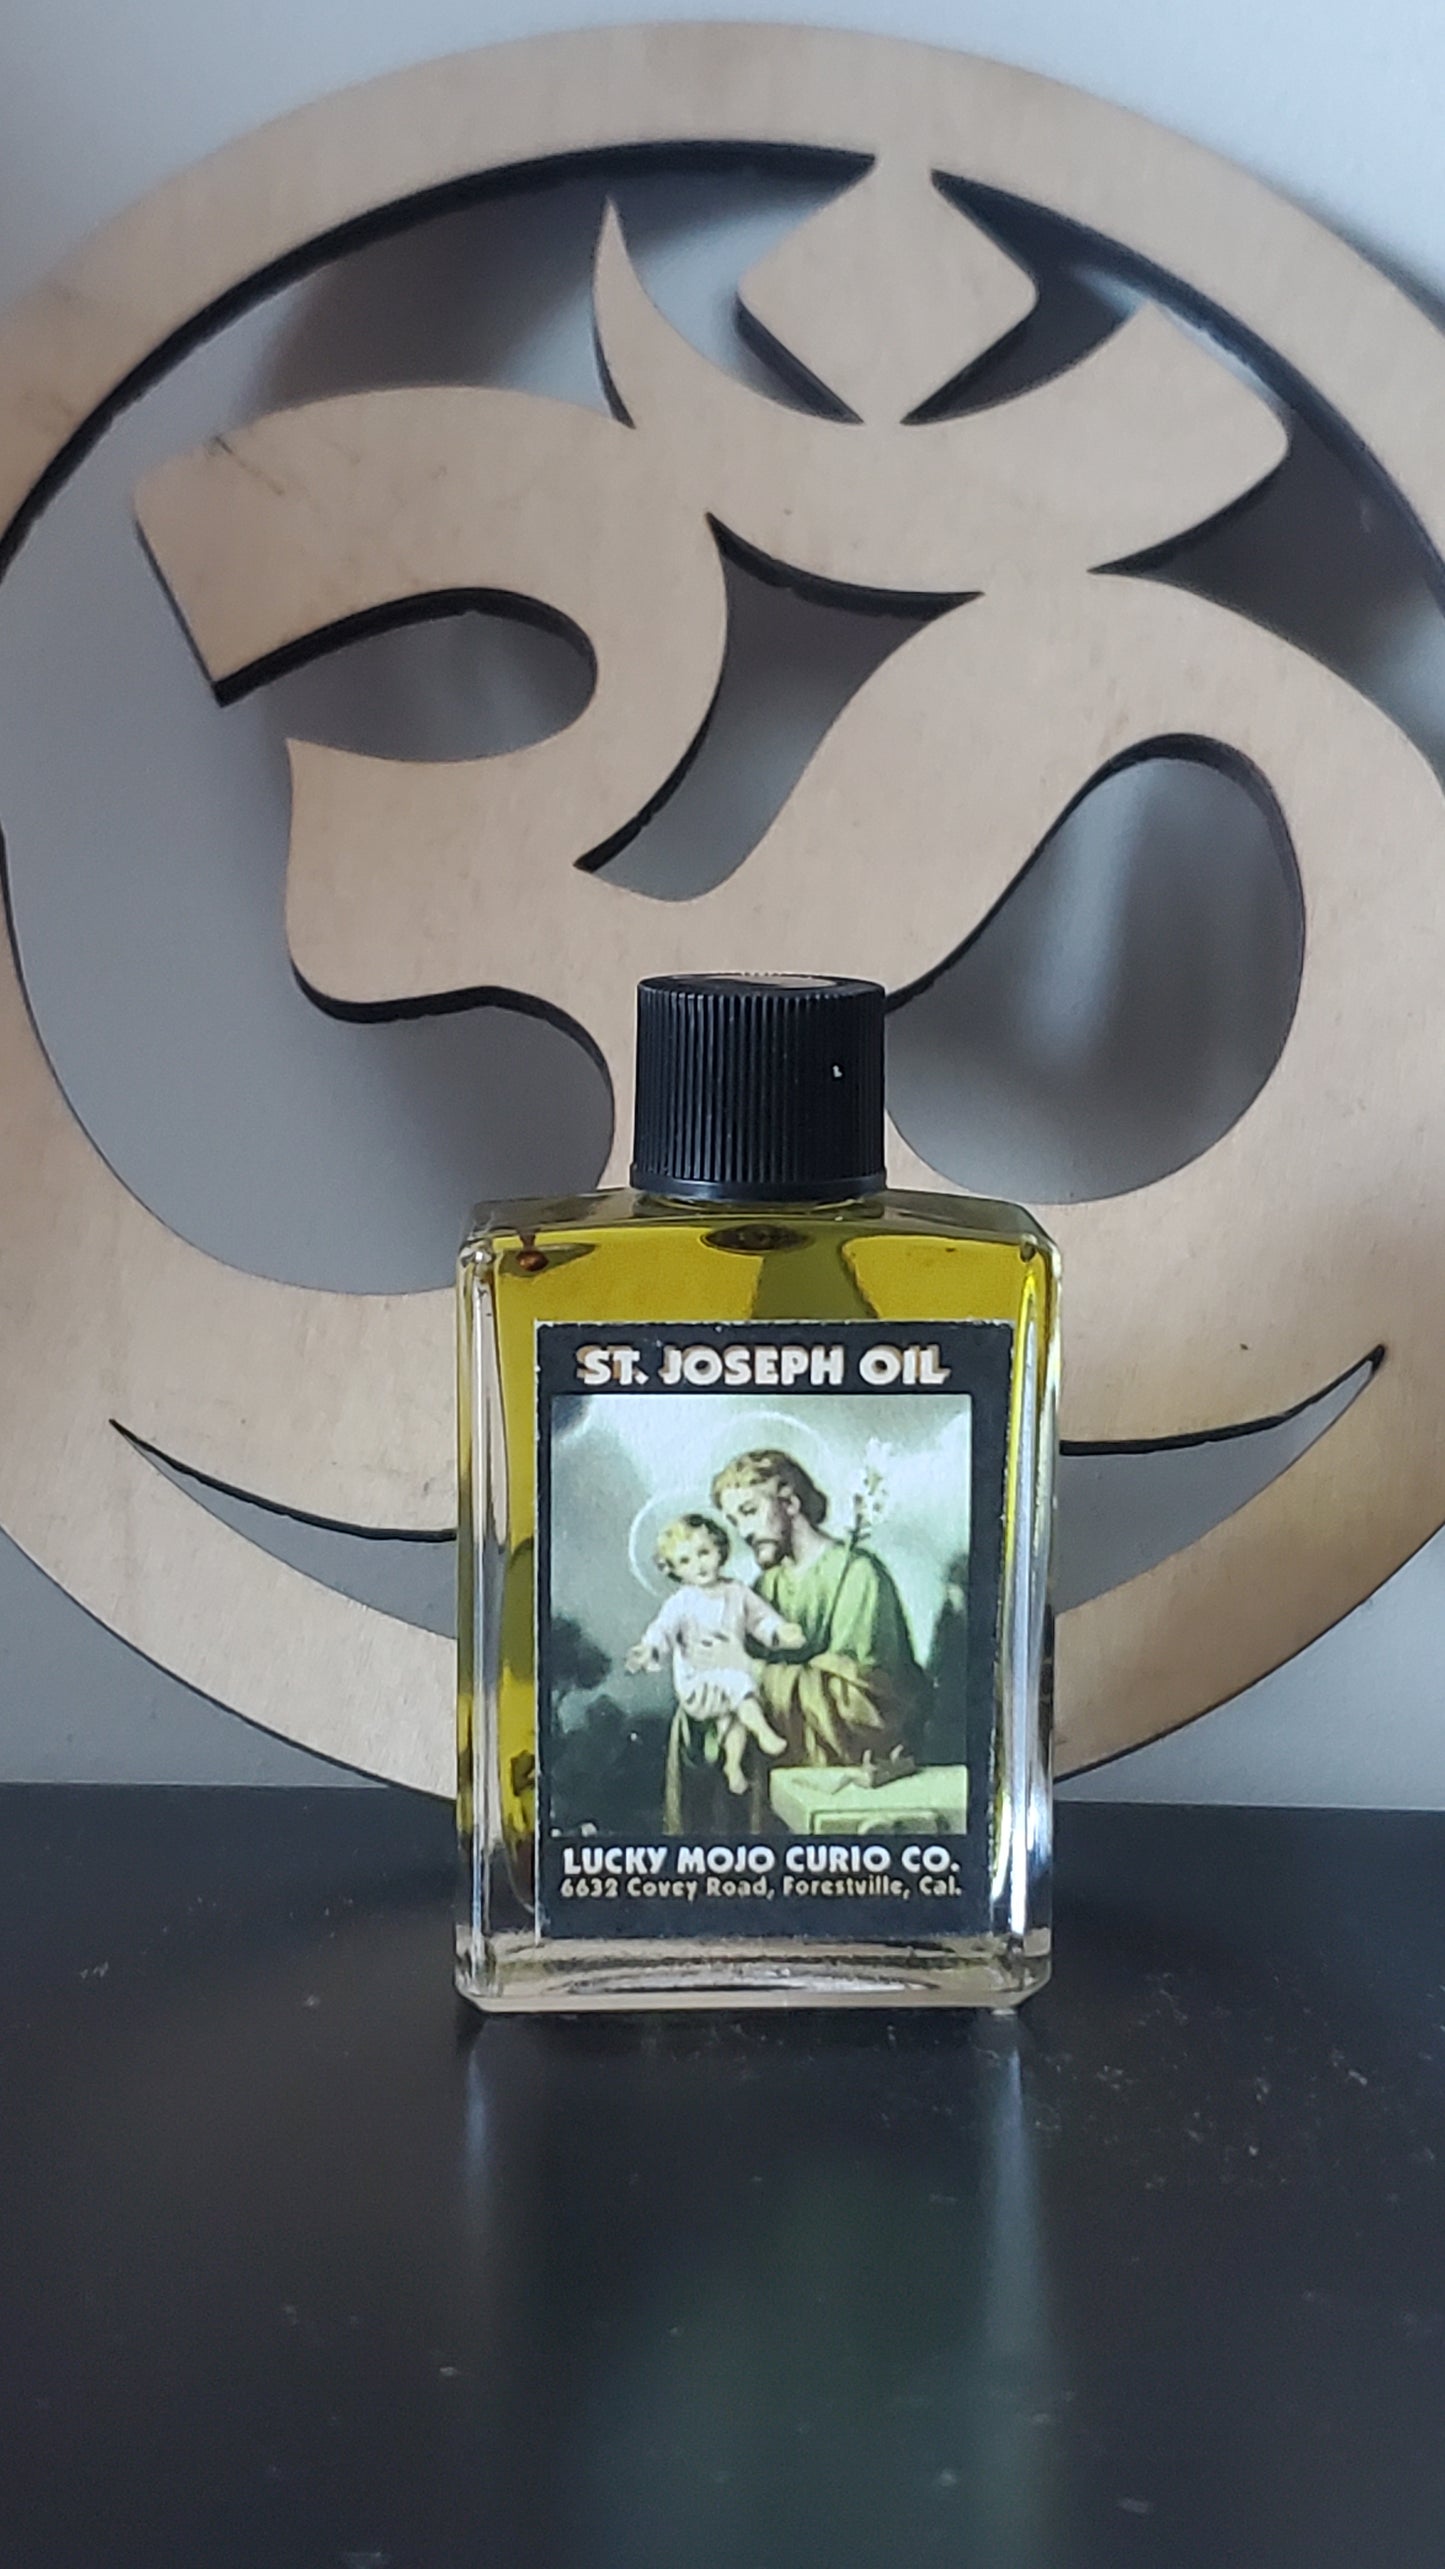 LuckyMojoCurioCo "St Joseph Oil" Anointing / Conjure Oil #Great Deal #LuckyMojoCurioCo #LuckyMojo #EffectiveOils #HoodooOils